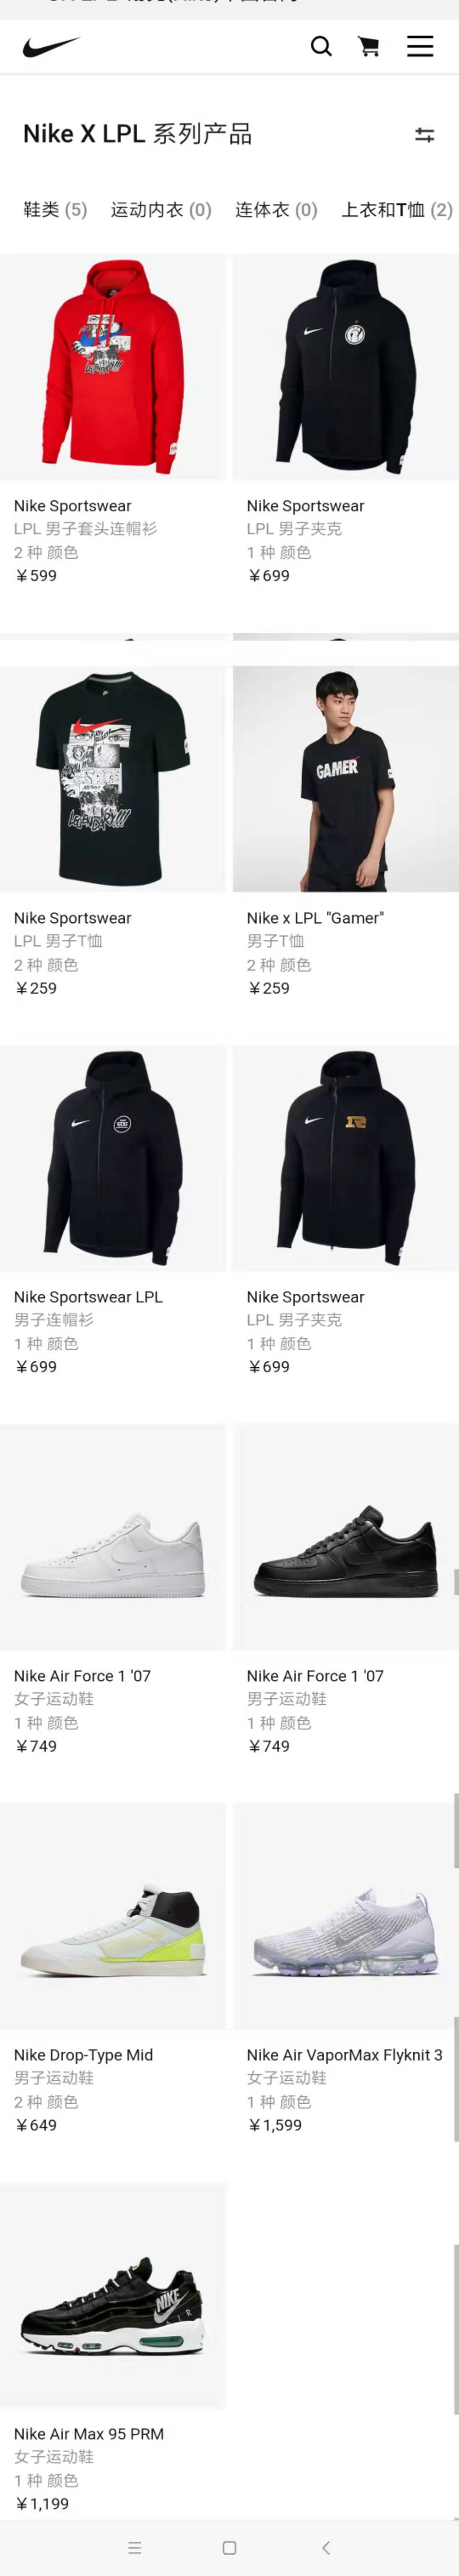 Nike X LPL 系列产品发售：包含EDG、iG、RNG三队外套